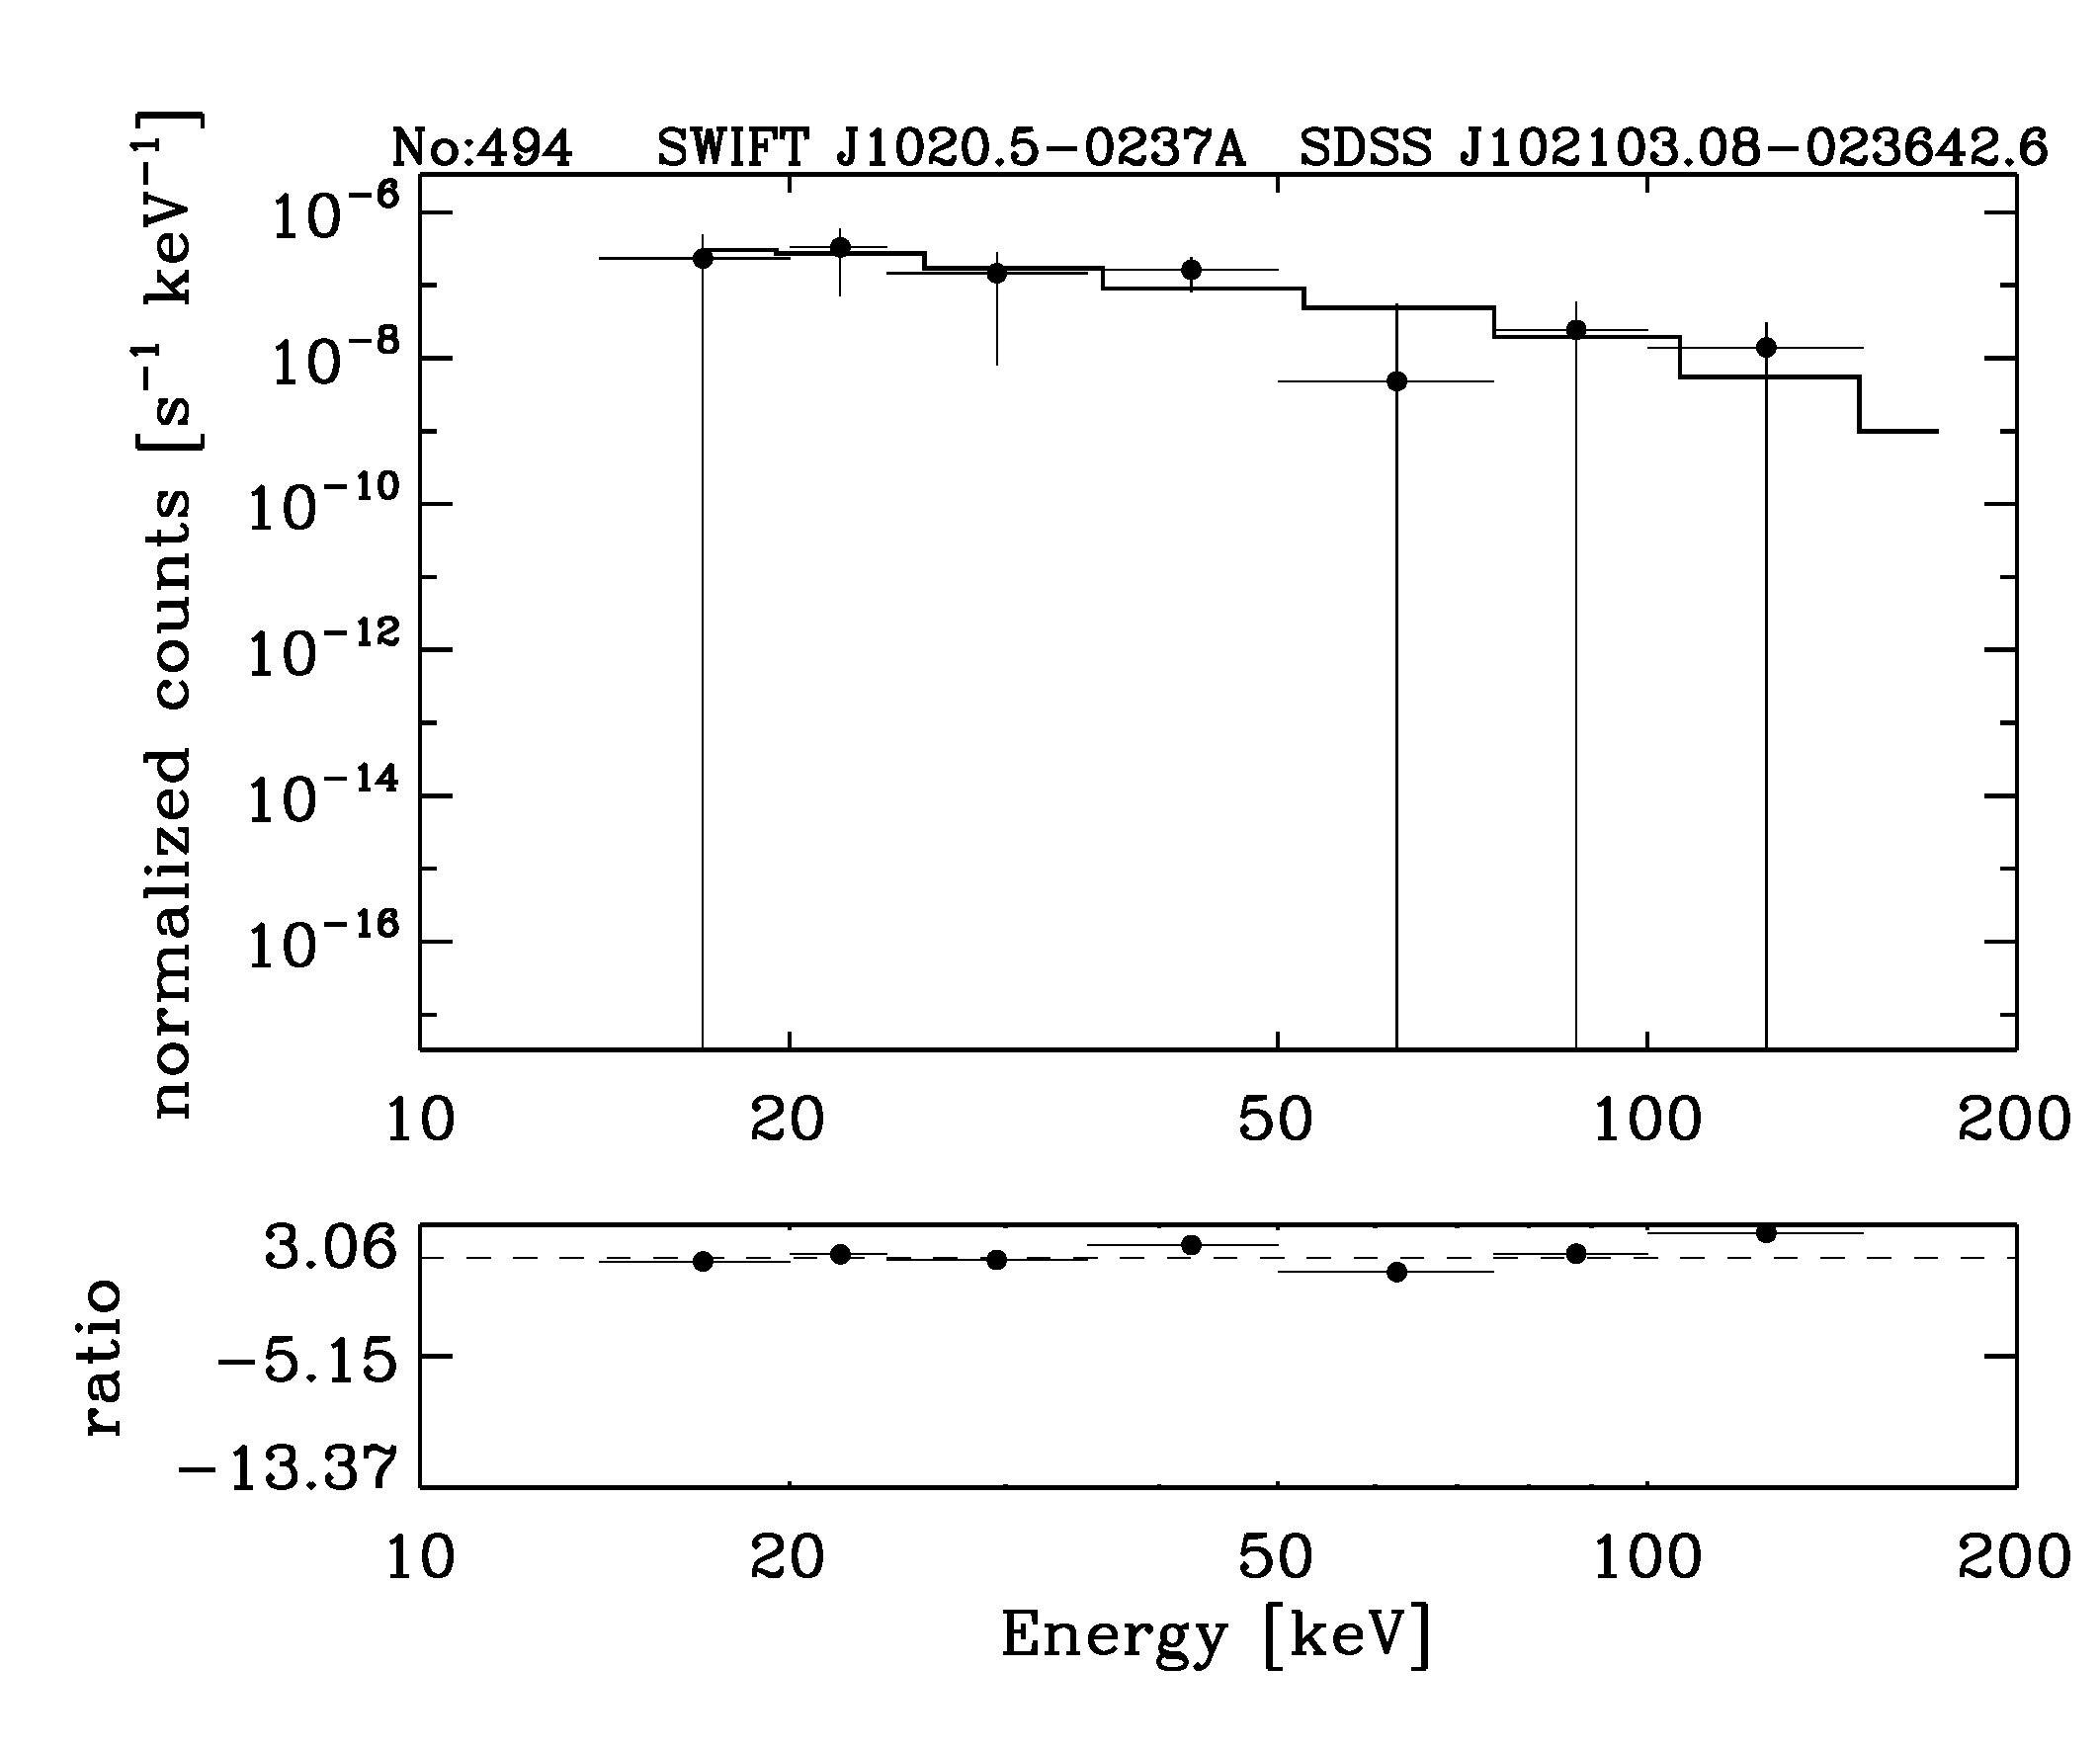 BAT Spectrum for SWIFT J1020.5-0237A